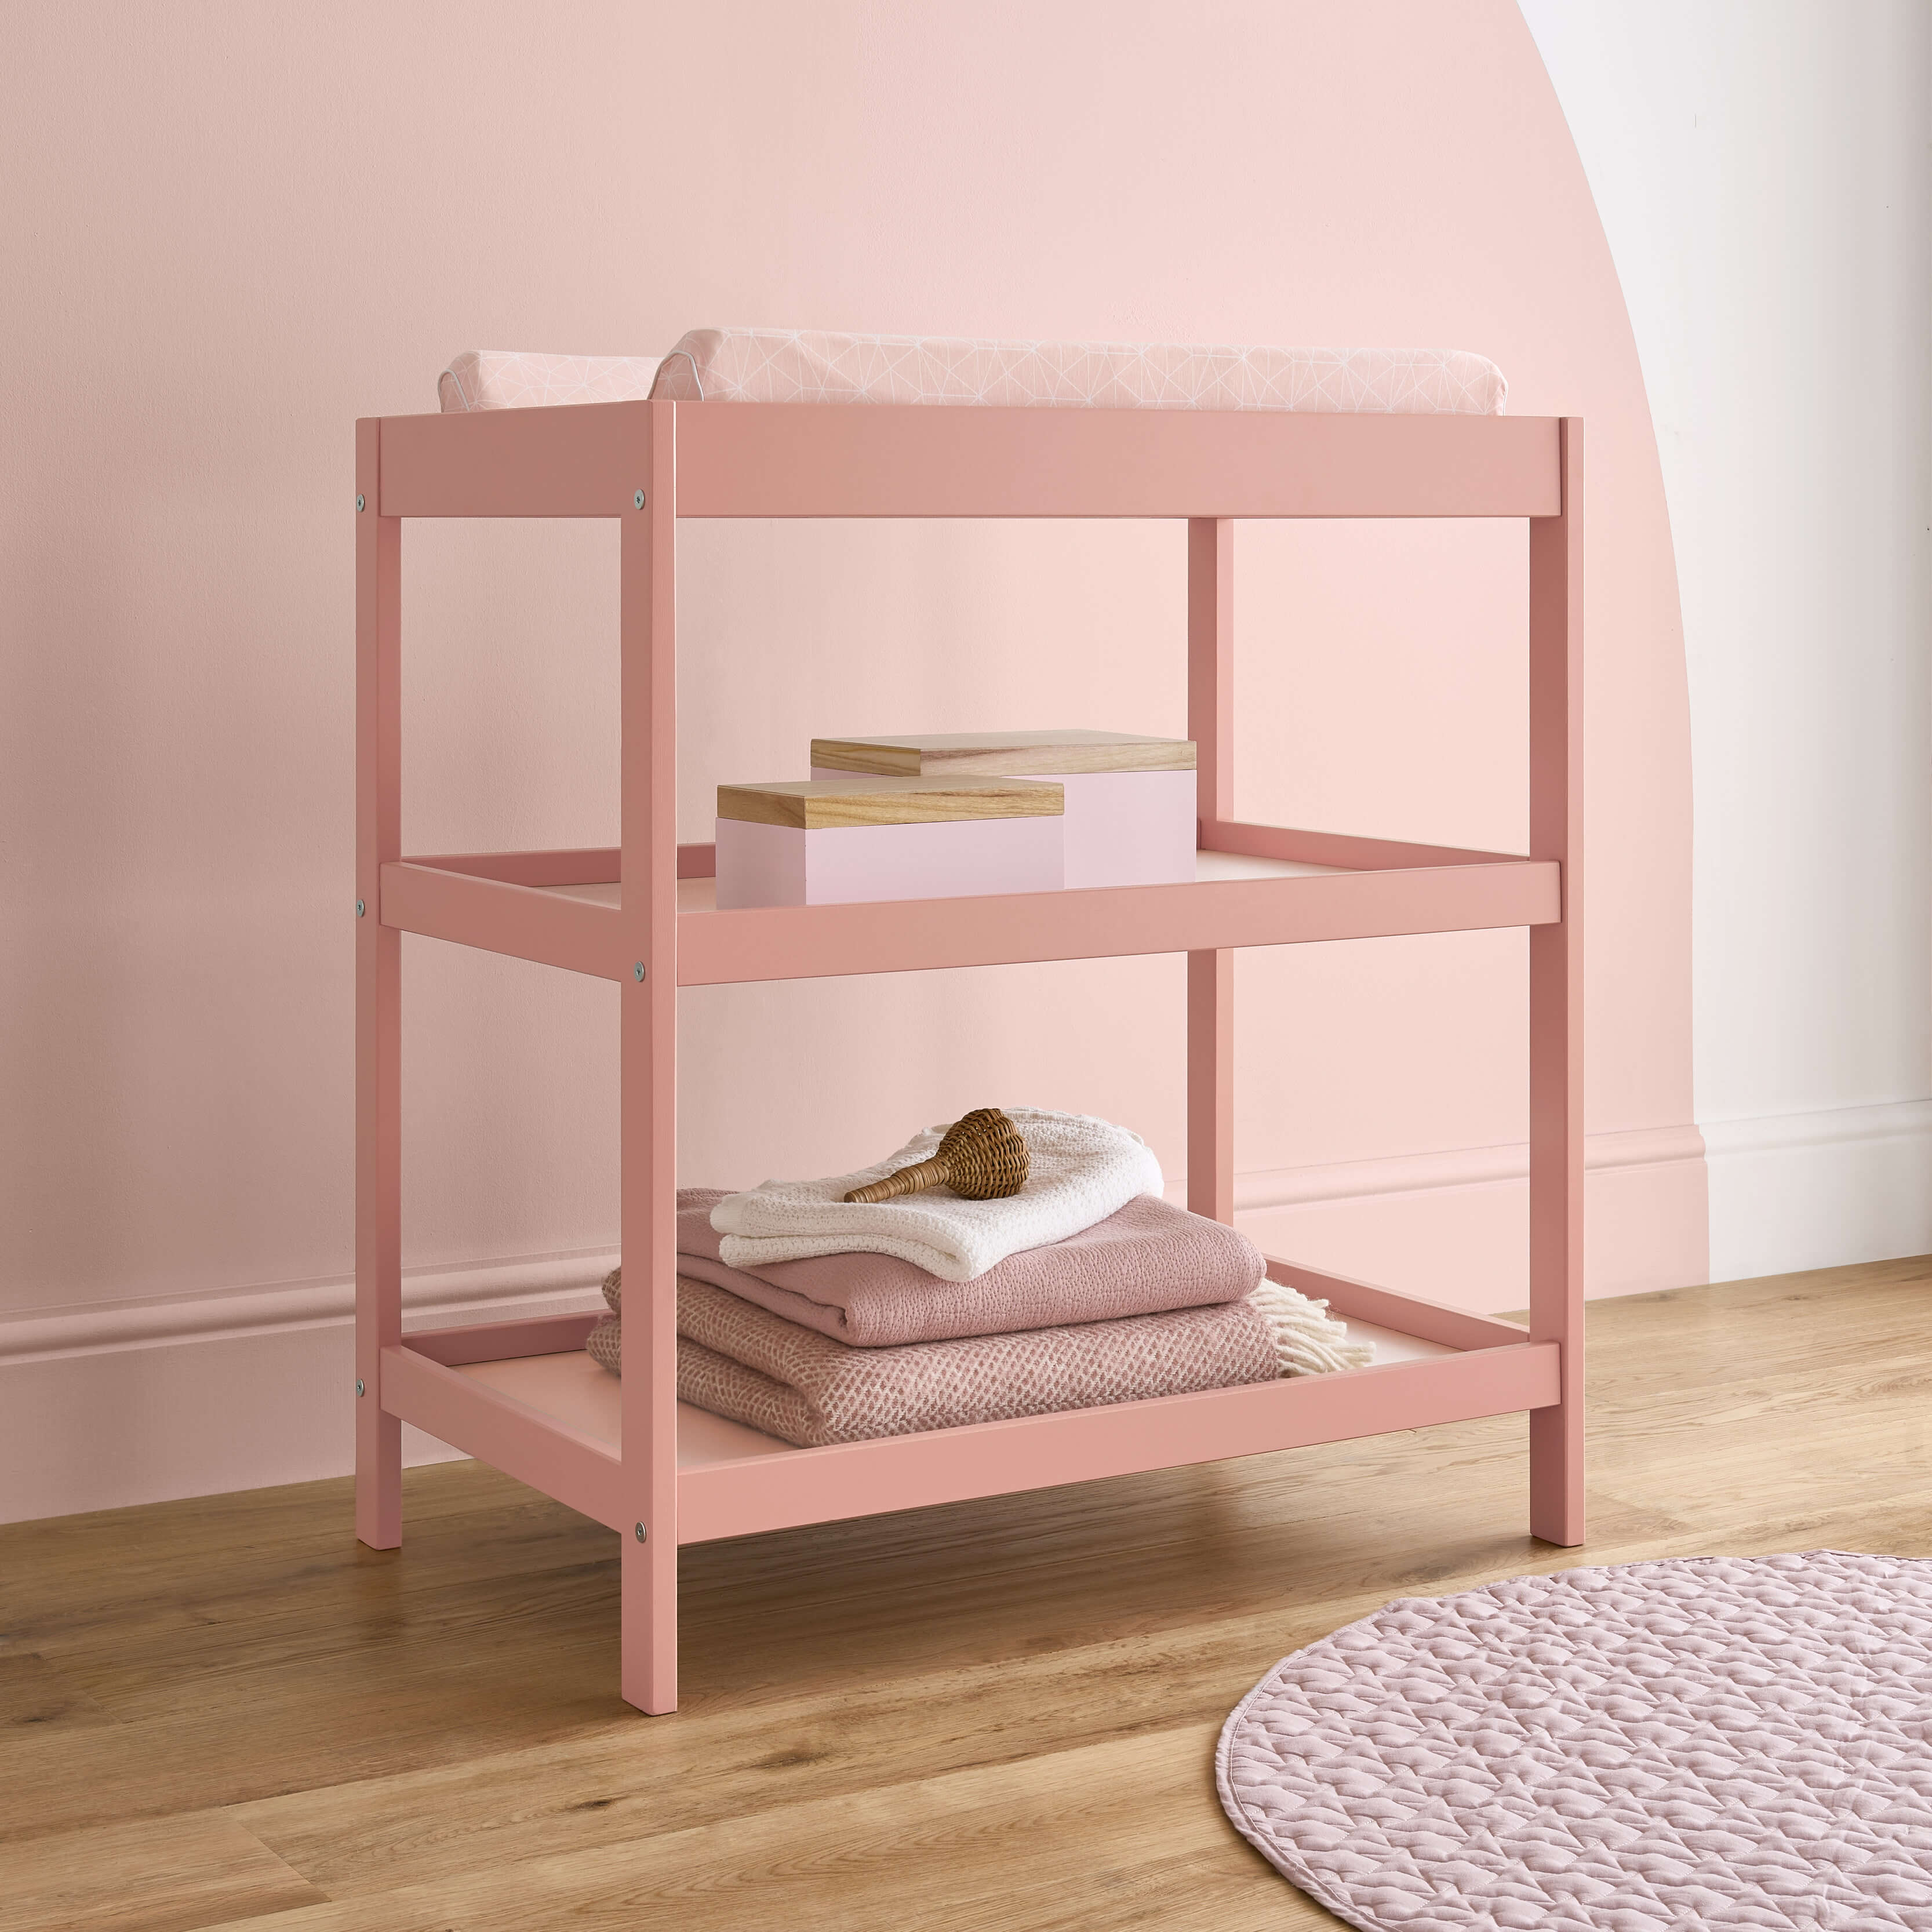 CuddleCo Nursery Room Sets CuddleCo Nola 2 Piece Room Set - Soft Blush